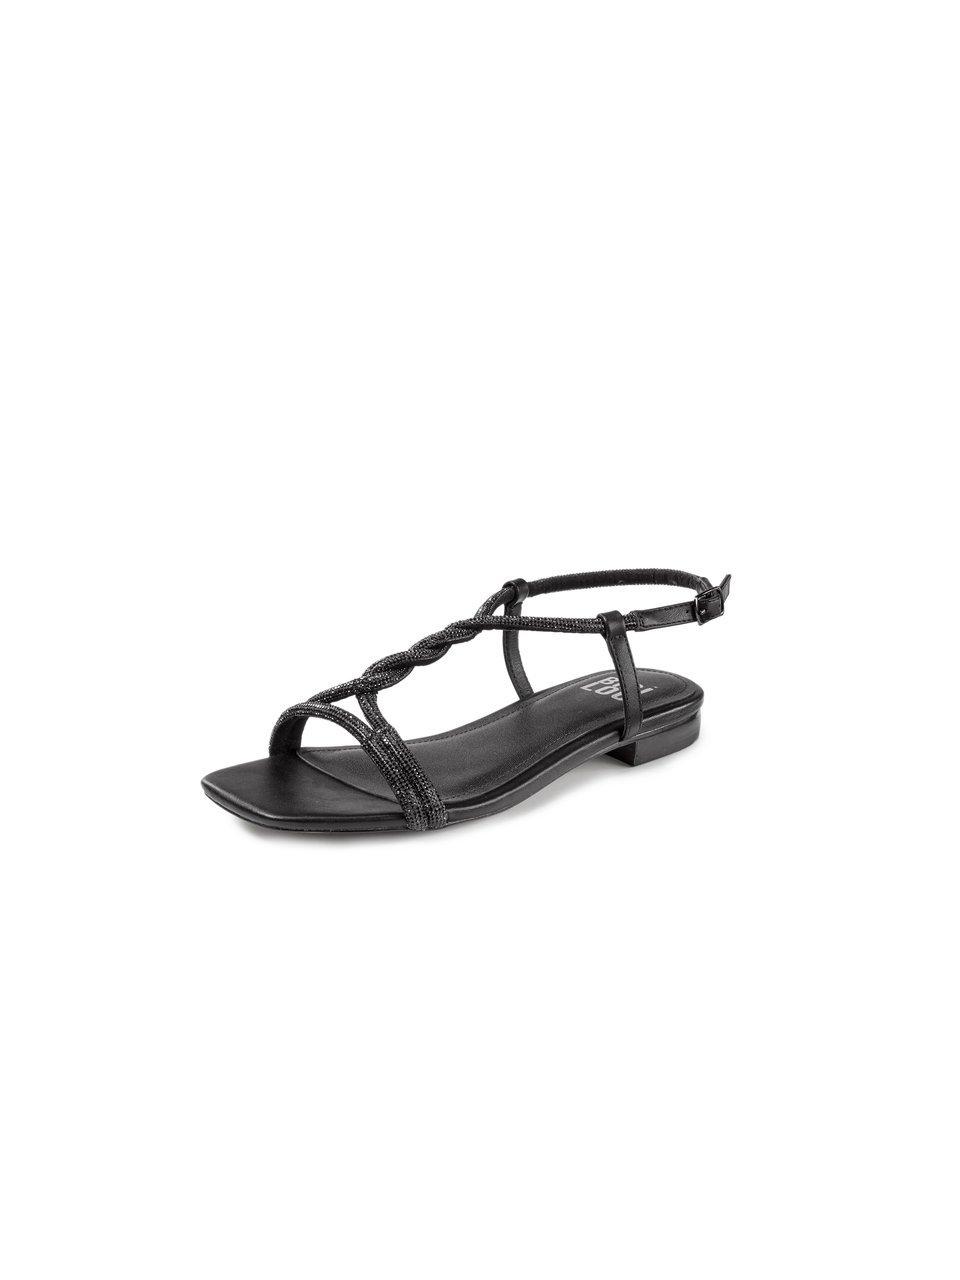 Riempjes-sandalen Van Bibi Lou zwart